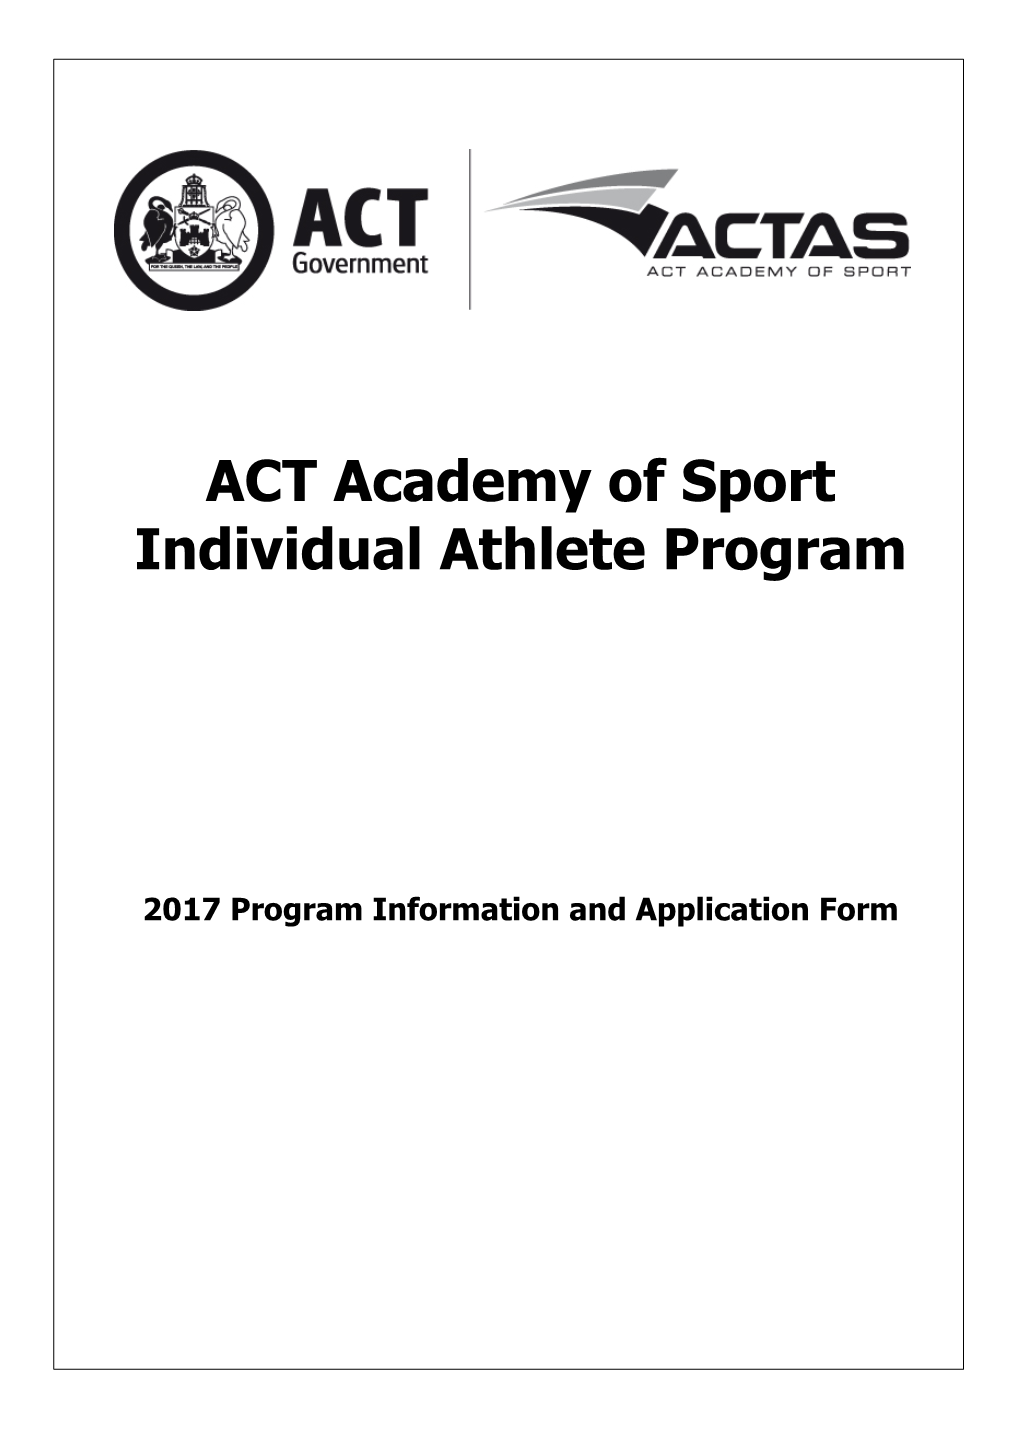 ACT Academy of Sport Individual Athlete Scholarship Program